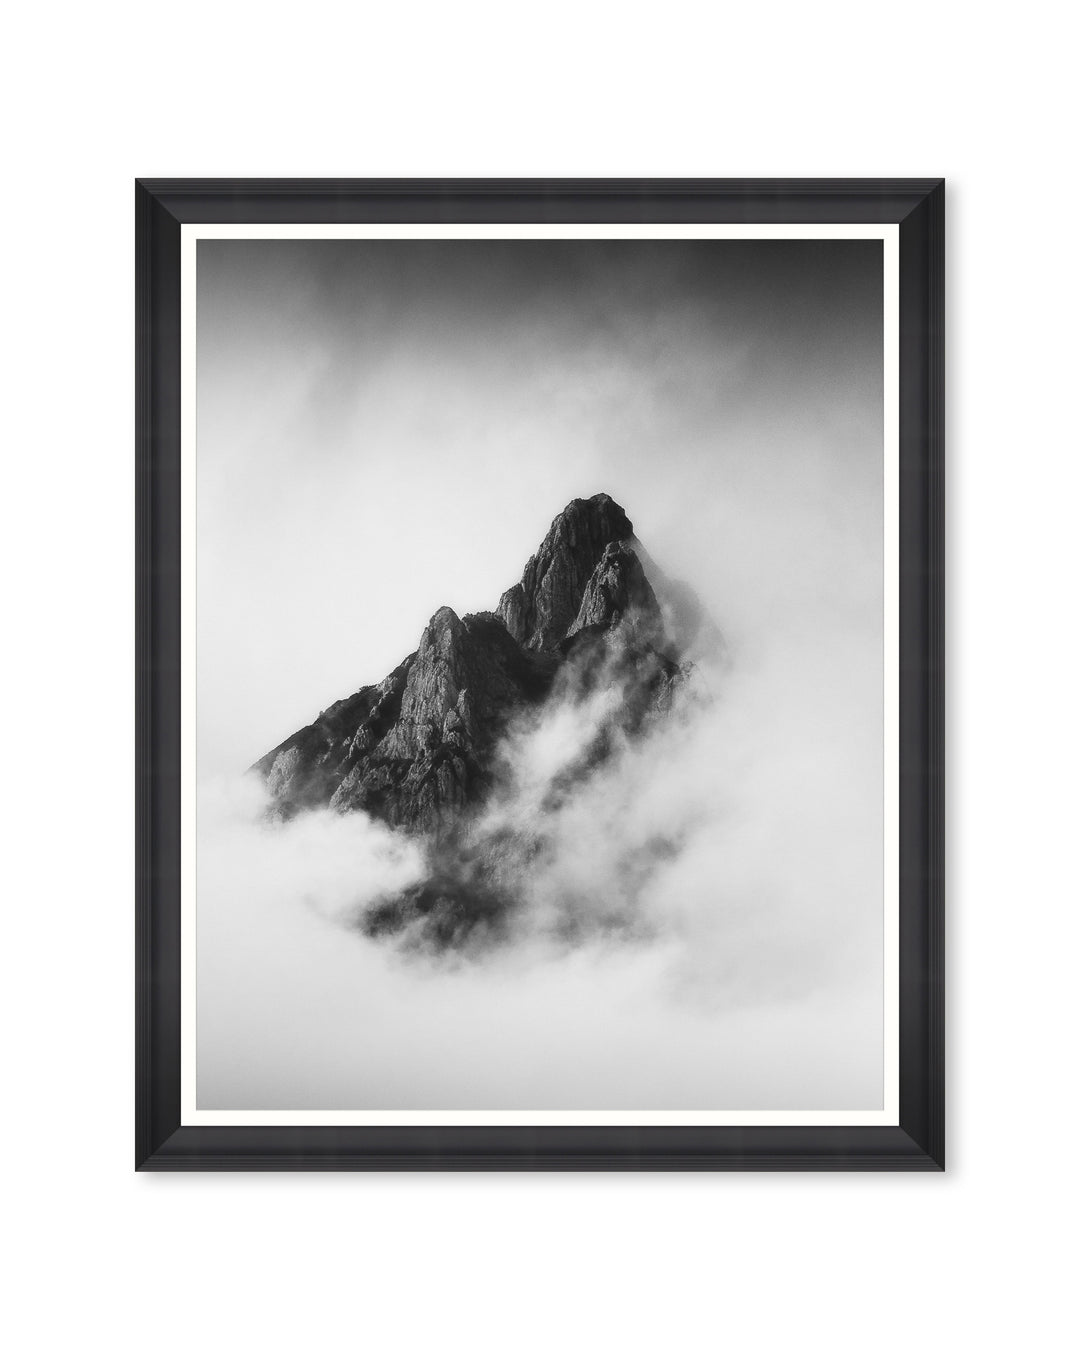 mind-the-gap-julian-alps-peak-photograph-black-and-white-monochrome-misty-framed-art